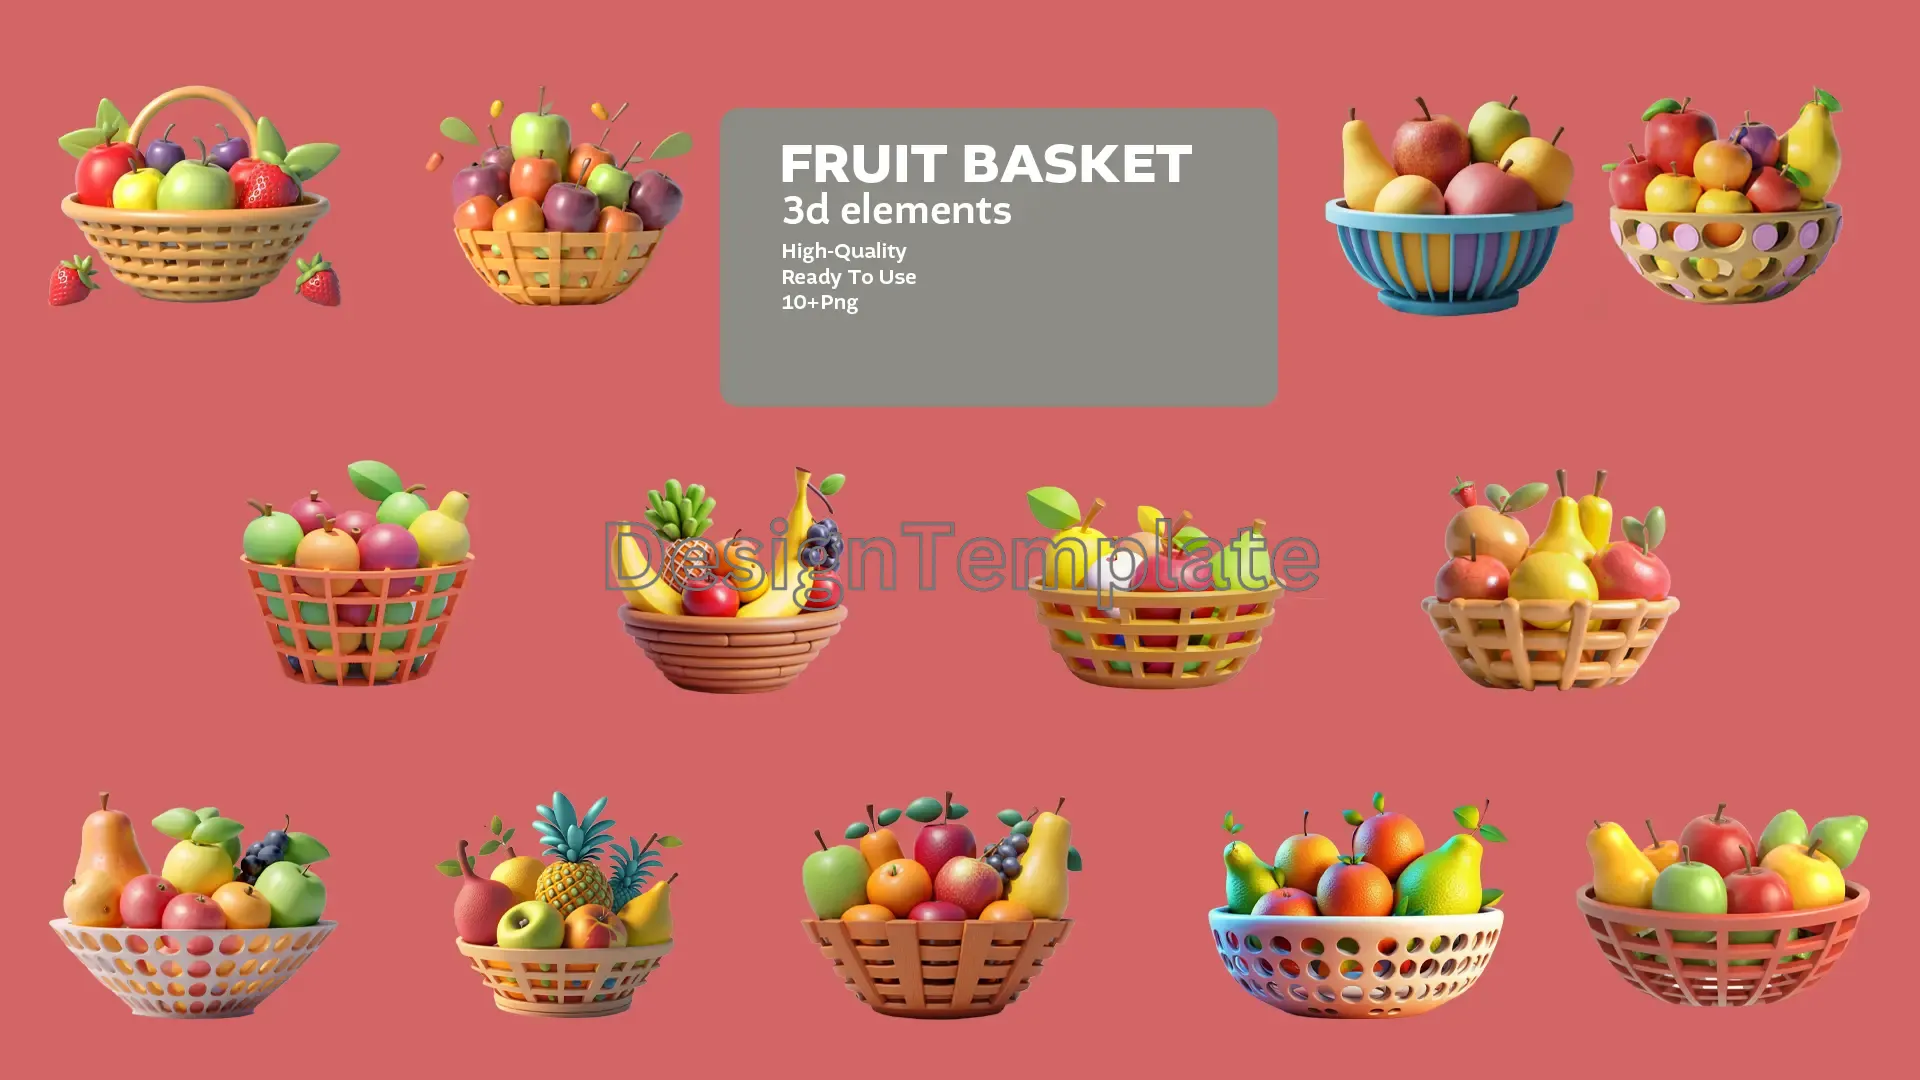 Harvest Delight Fruit Basket 3D Elements Collection image